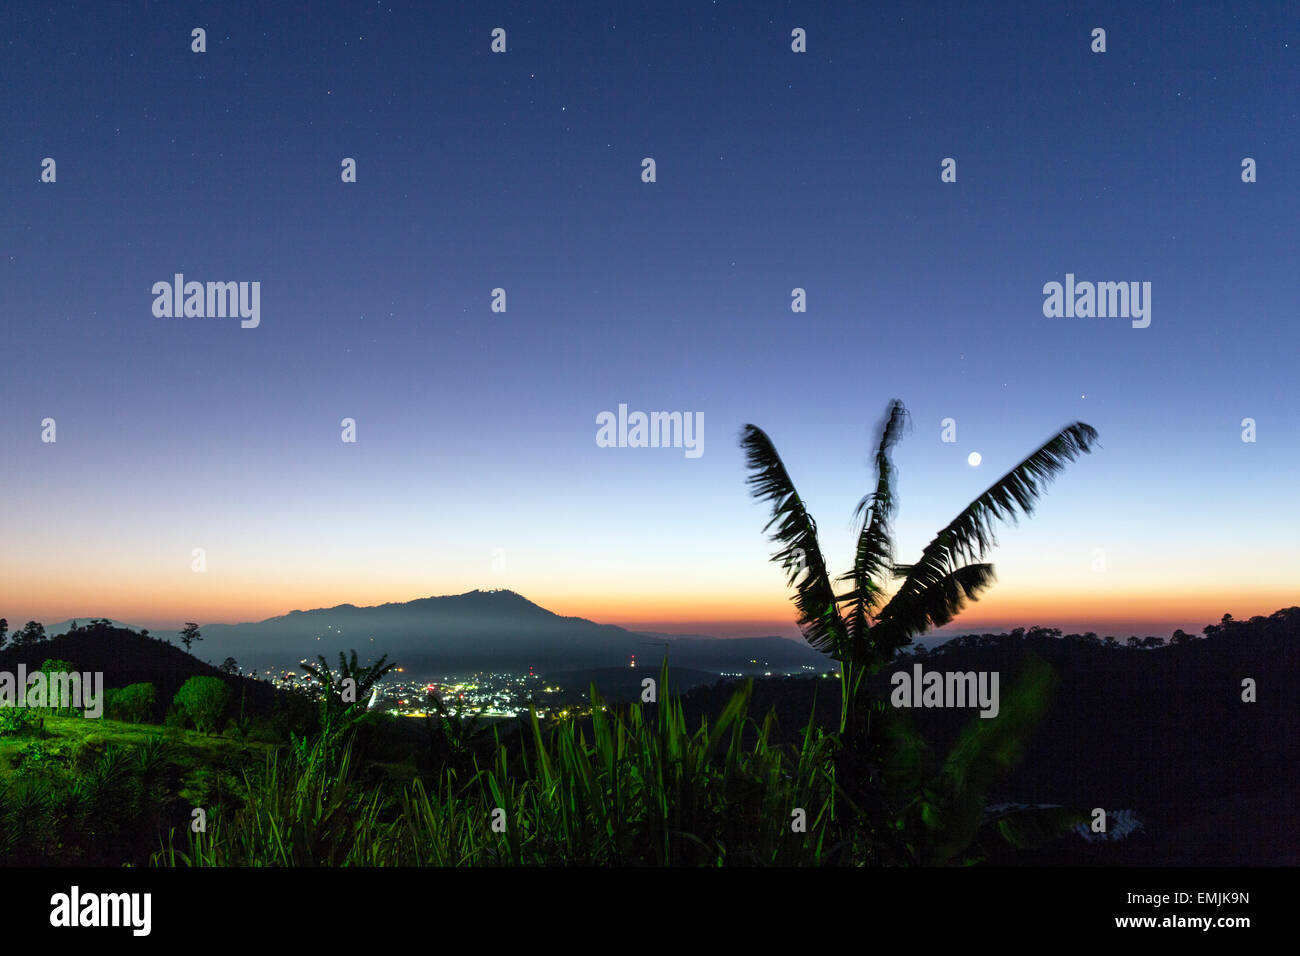 Guatemala,Jalapa,dawn with moon and stars Stock Photo